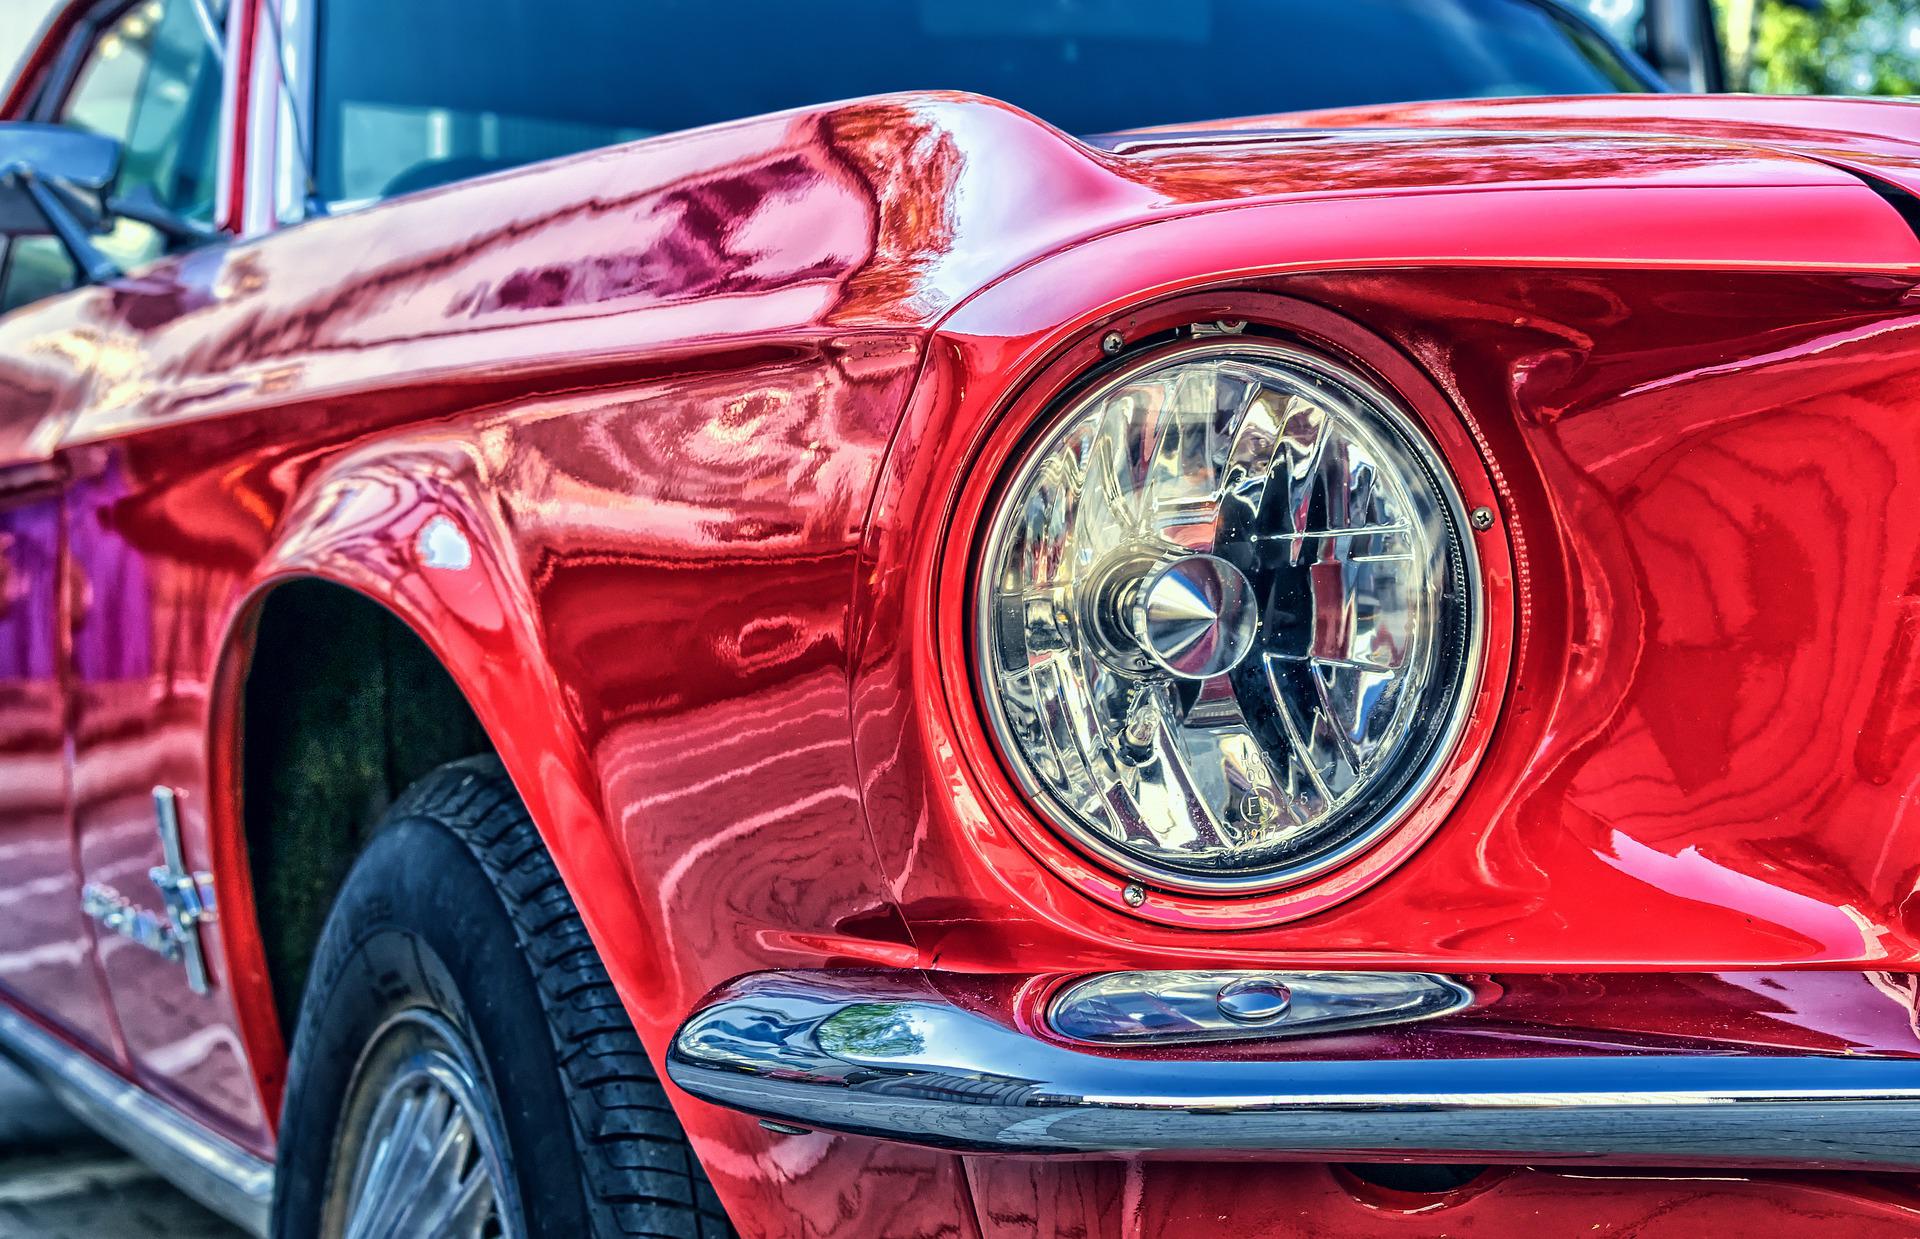 Ilustrasi: Penutup kerangka mobil disebut dengan Karoseri. (Pixabay)